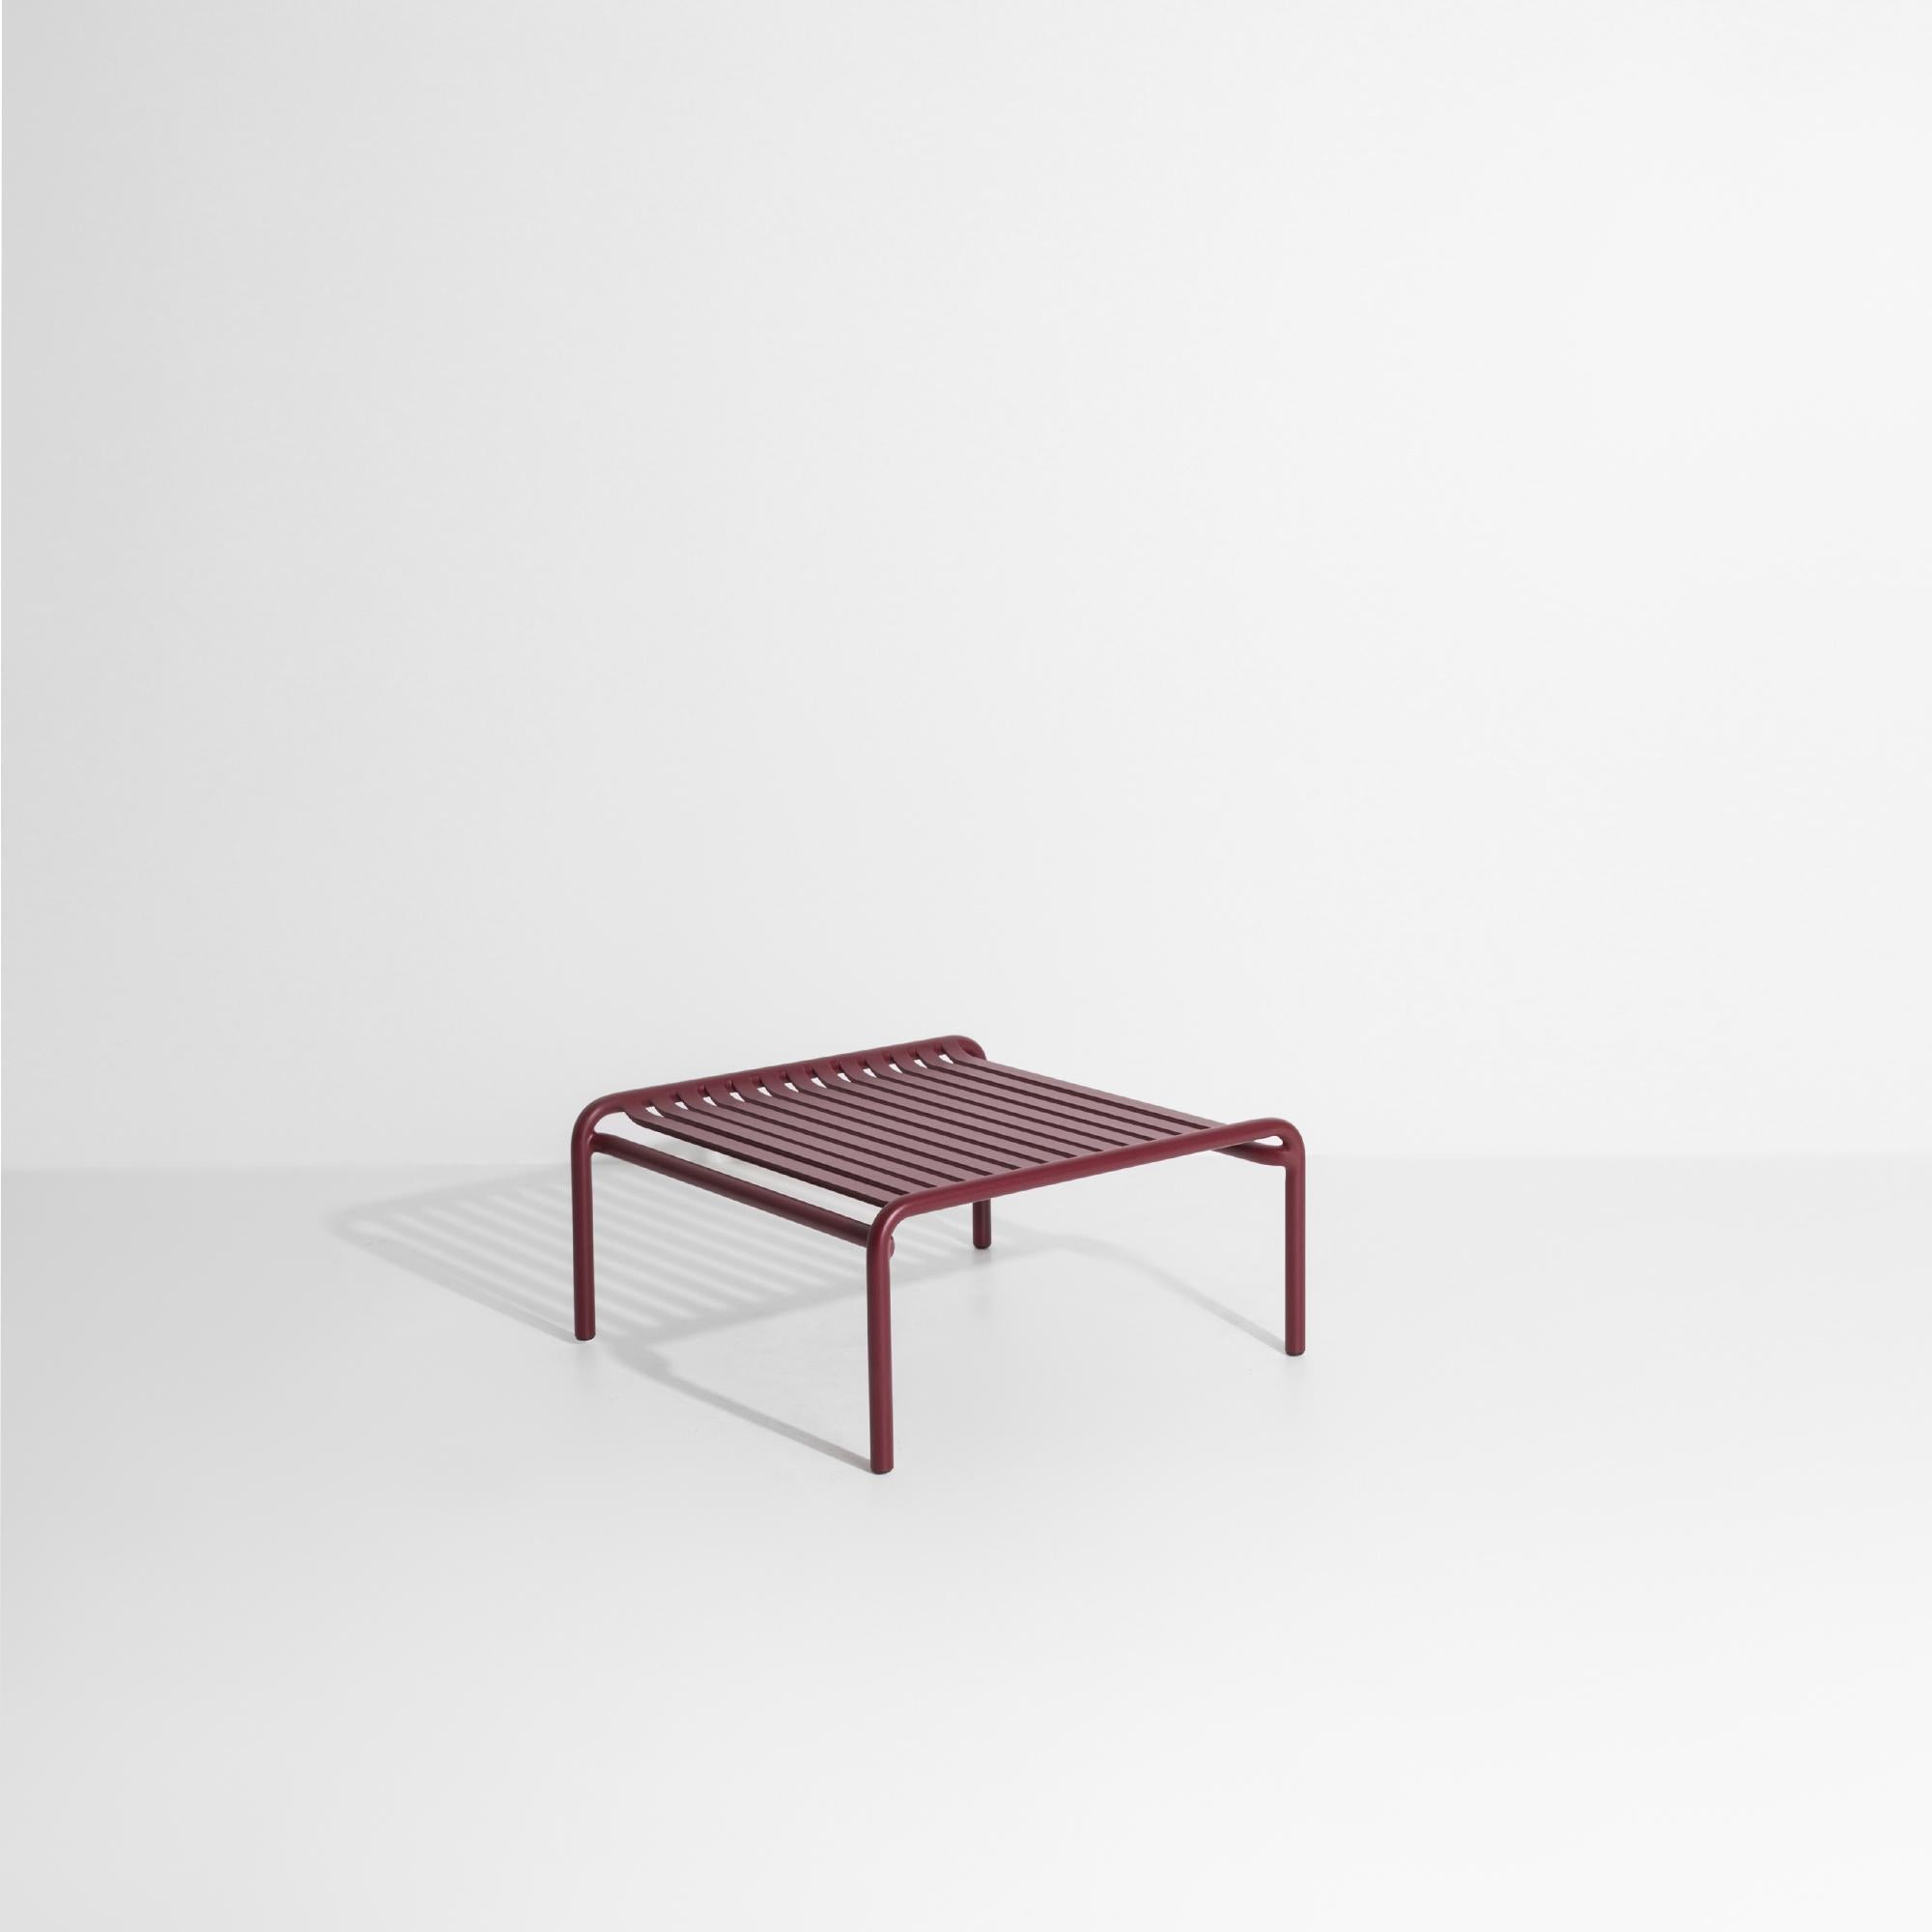 Petite table basse d'appoint Friture en aluminium bourgogne, 2017 Neuf - En vente à Brooklyn, NY